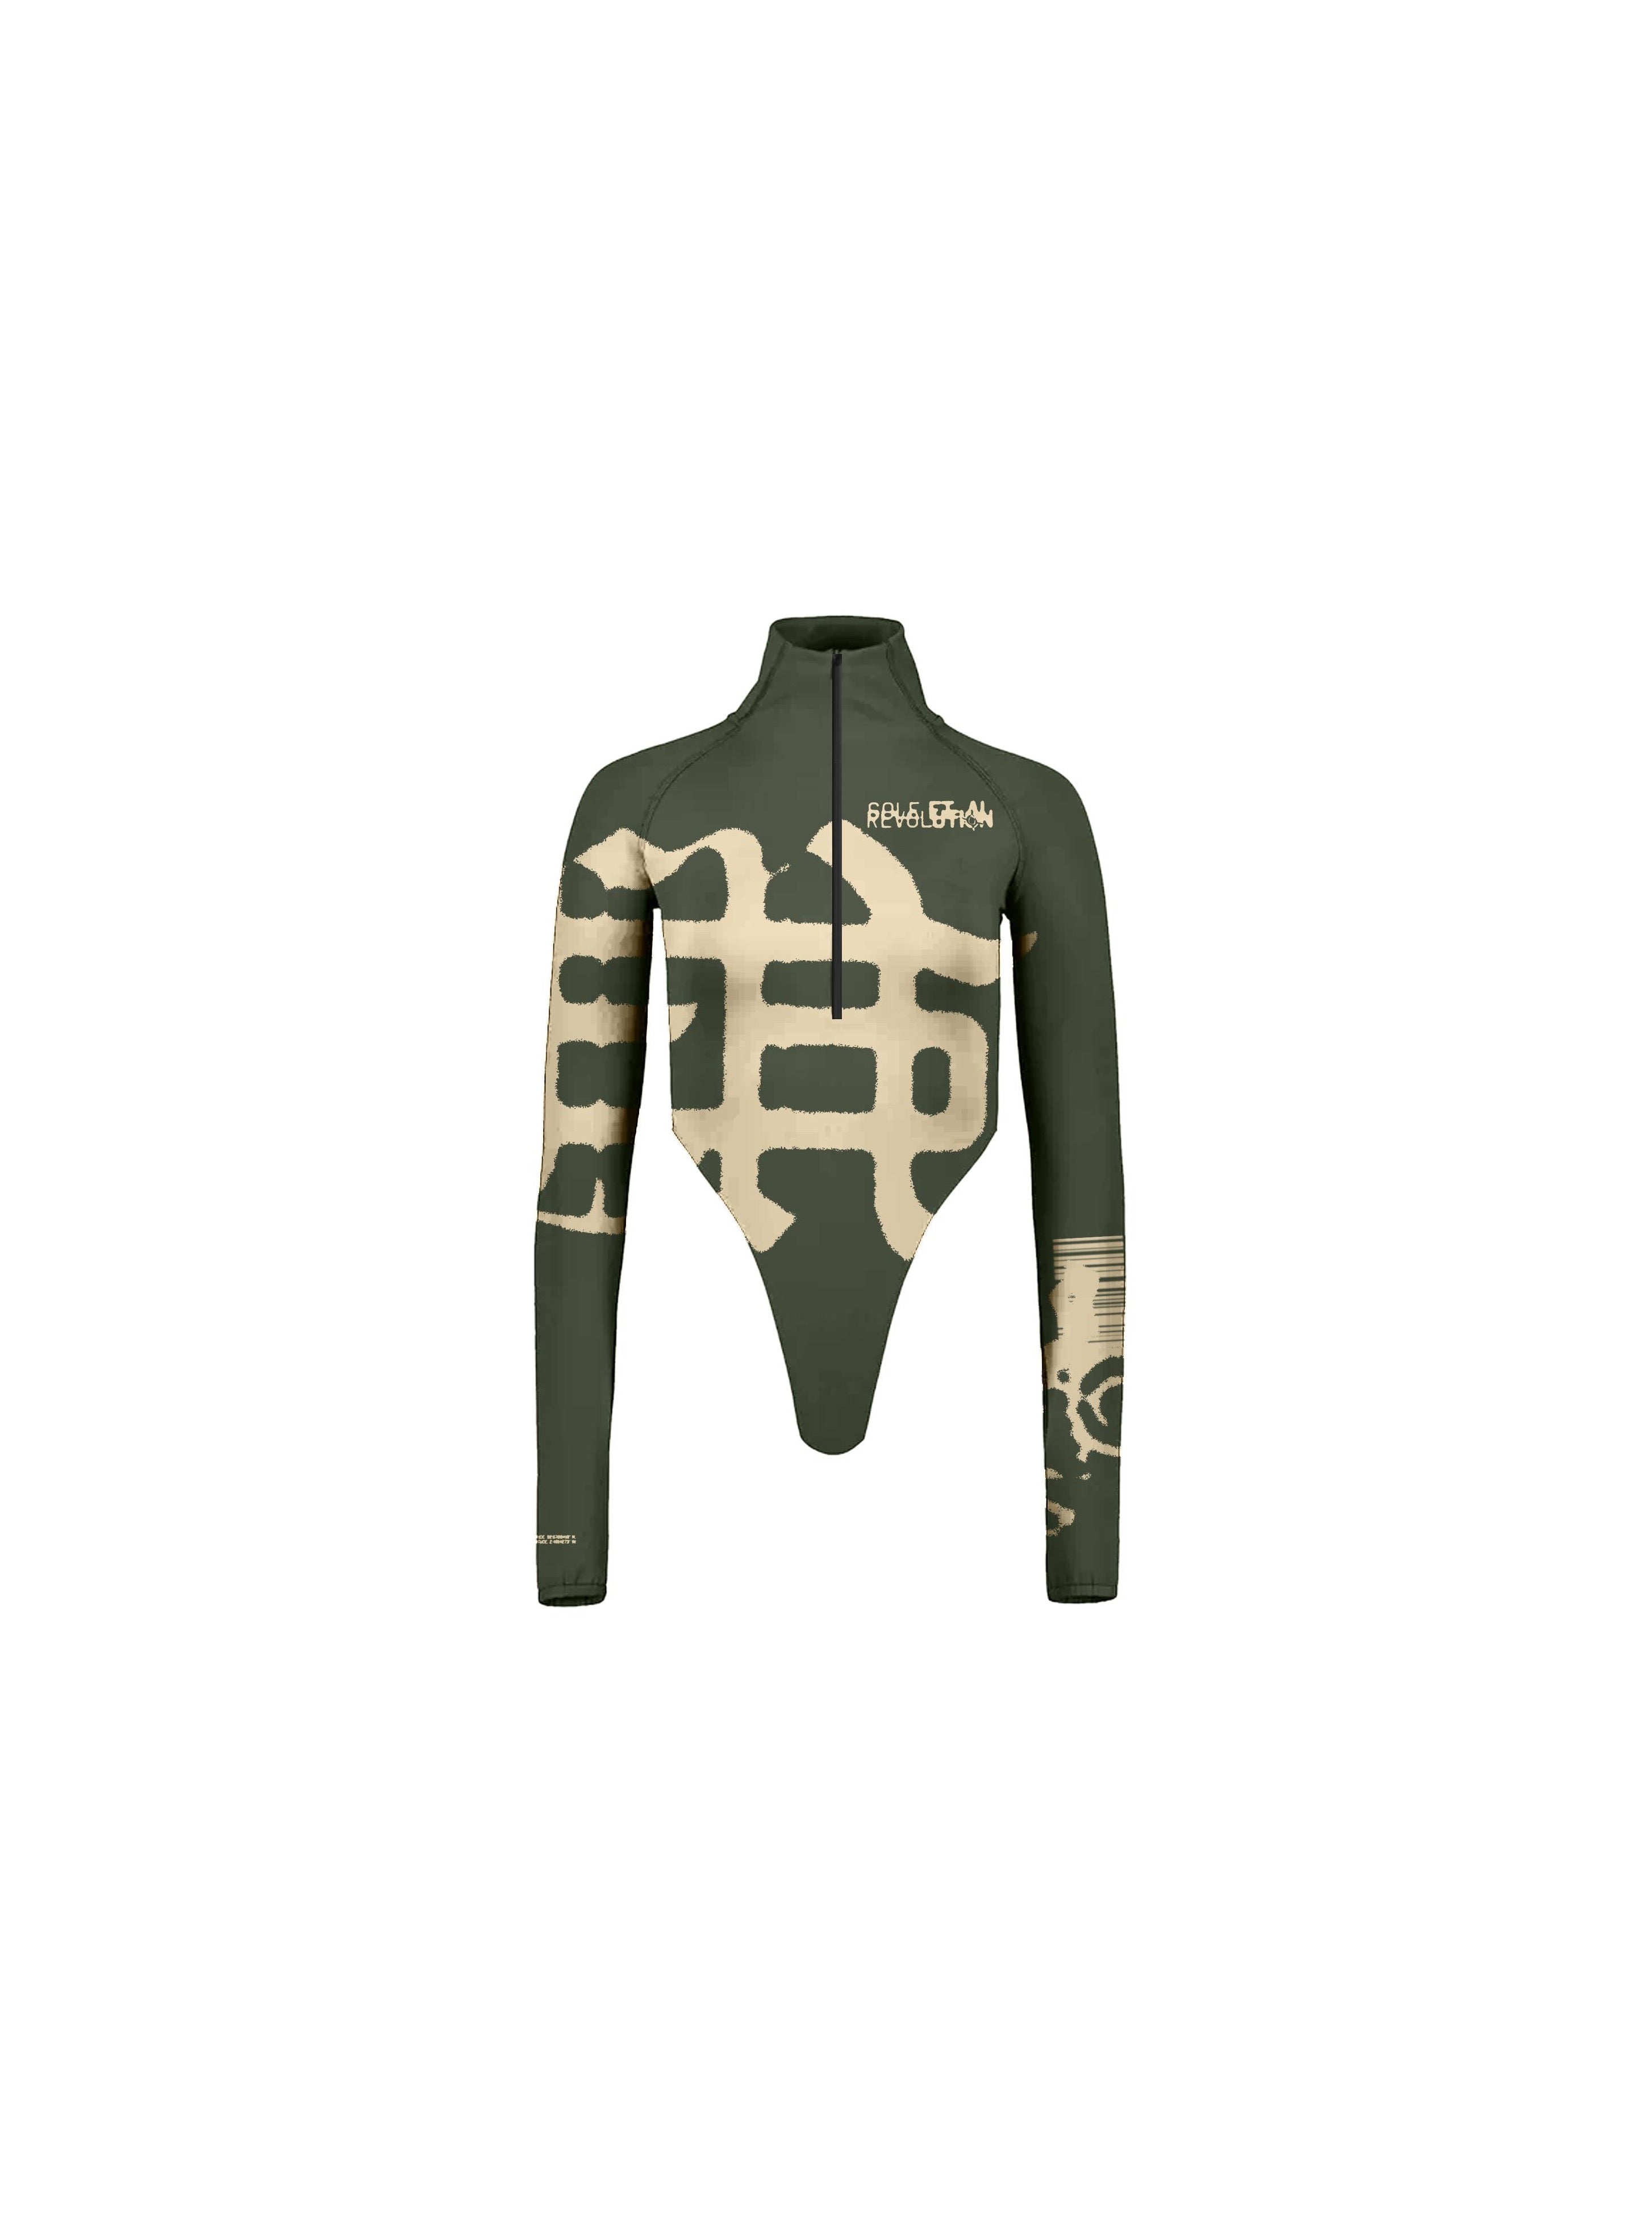 Sole et. Al Revølutiøn Zip Bodysuit : Militärgrün / Sand